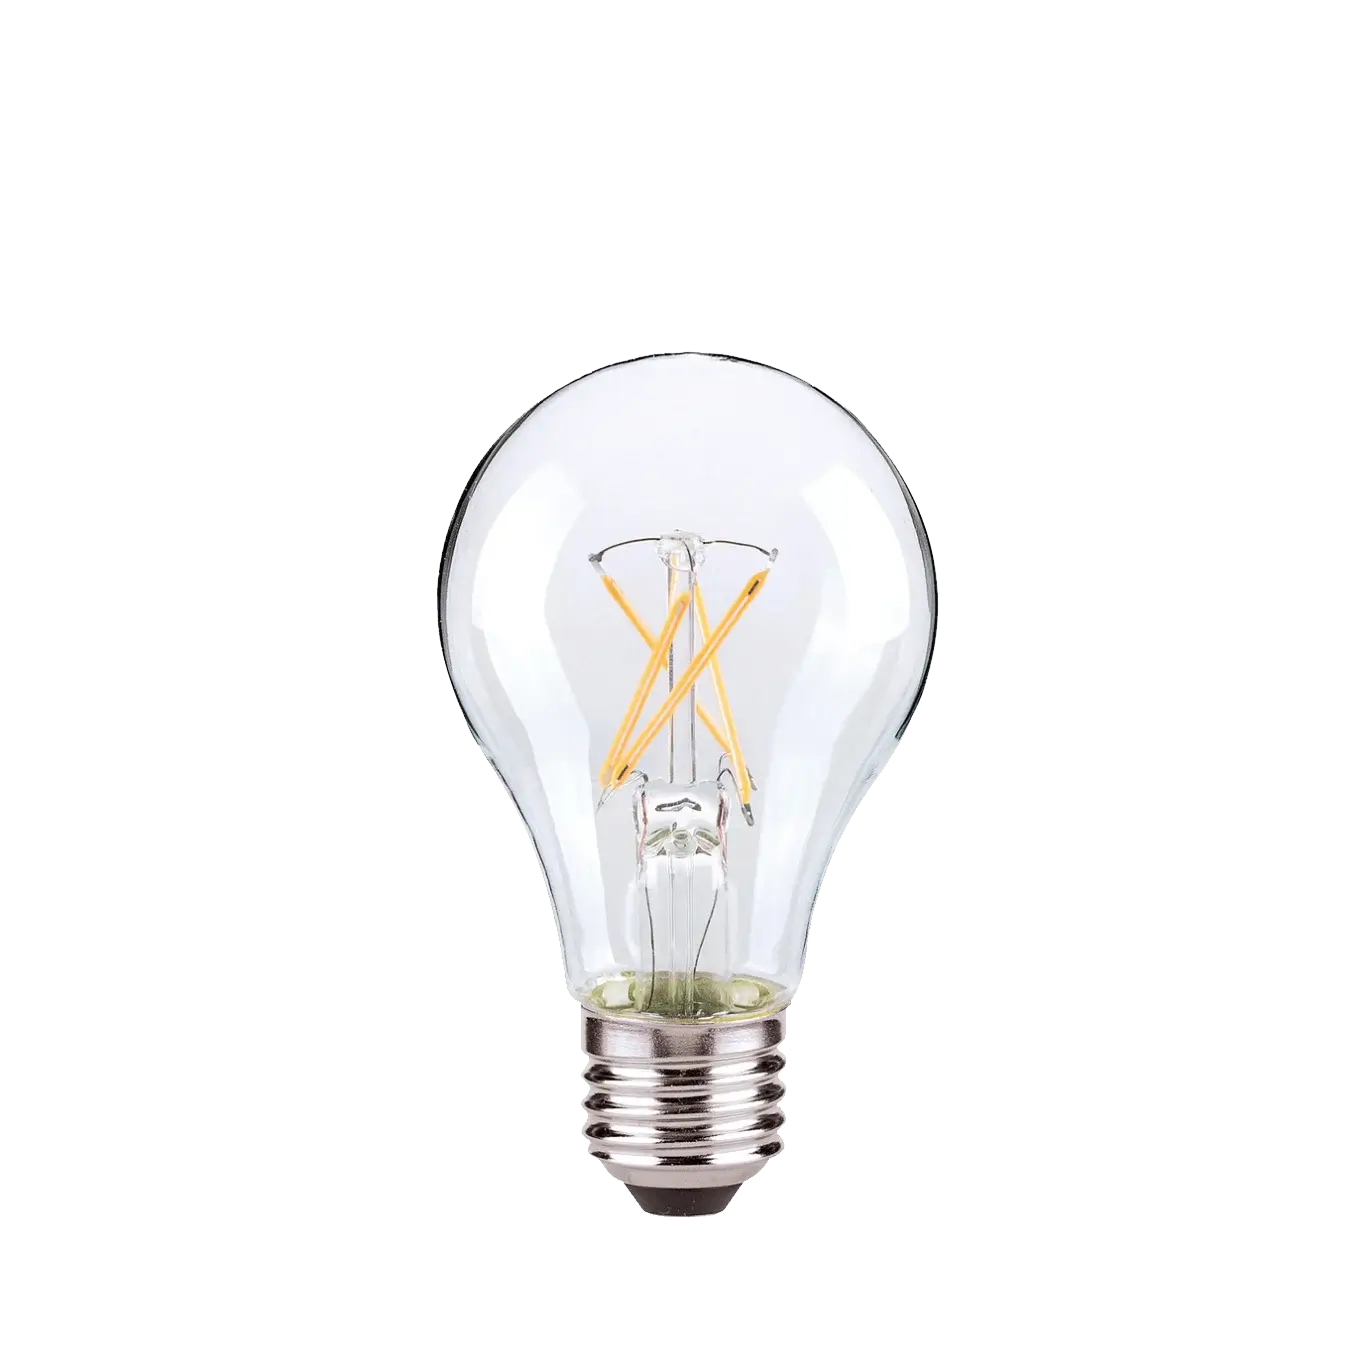 Dounia home LED light bulbs in, Model: A19